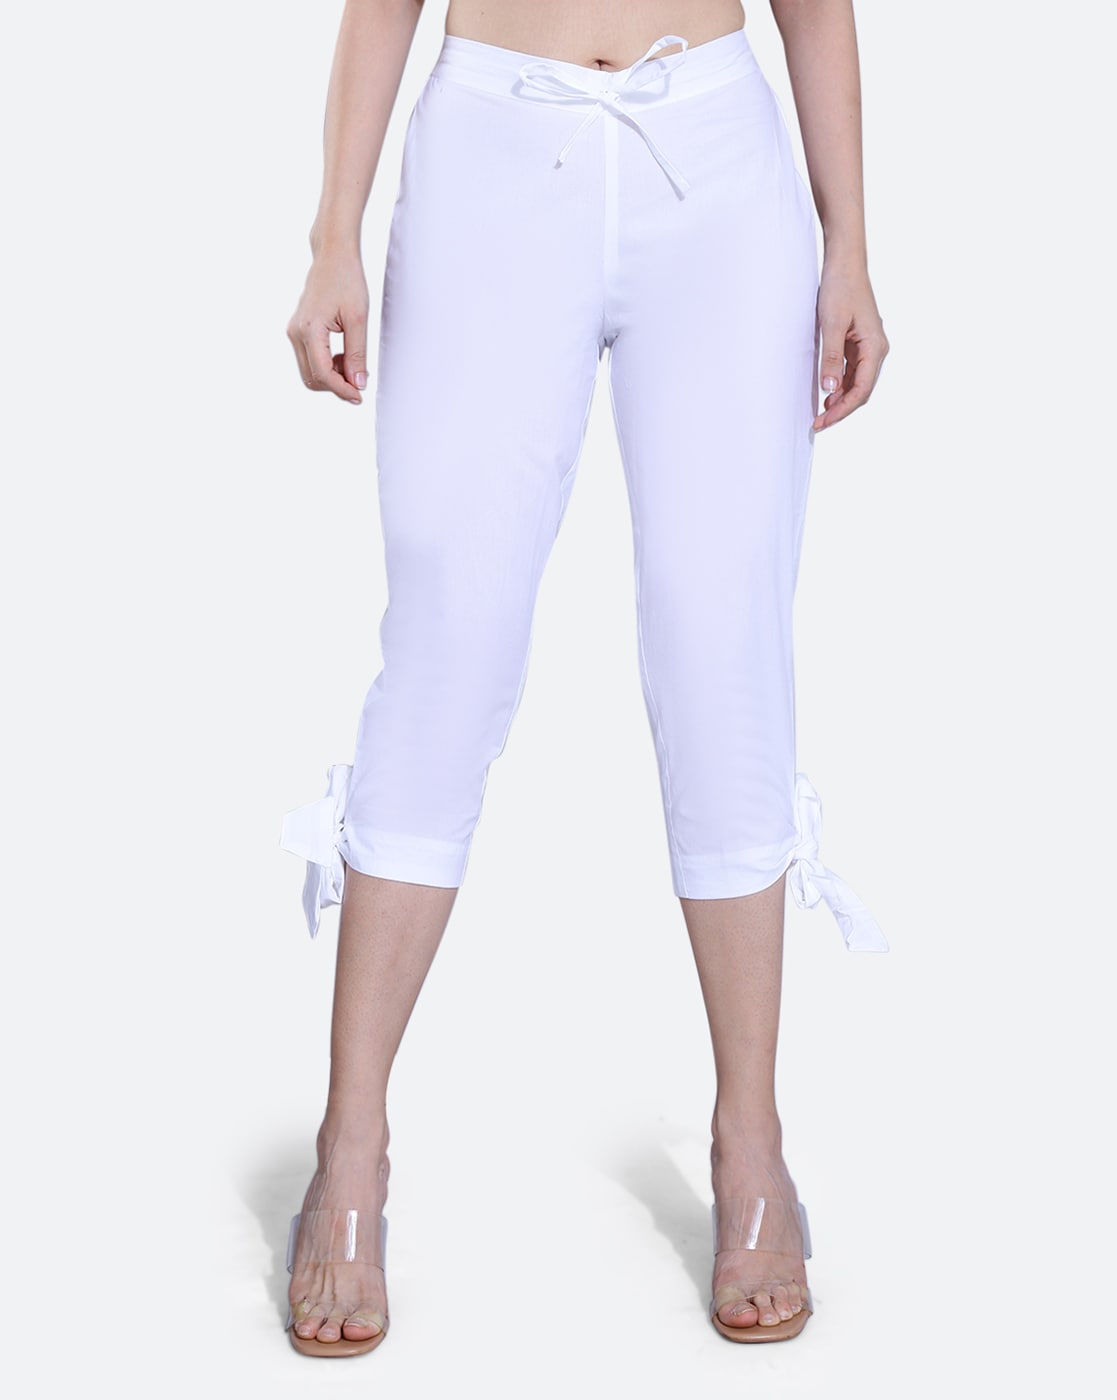 Capri pant - white - polyester/spandex